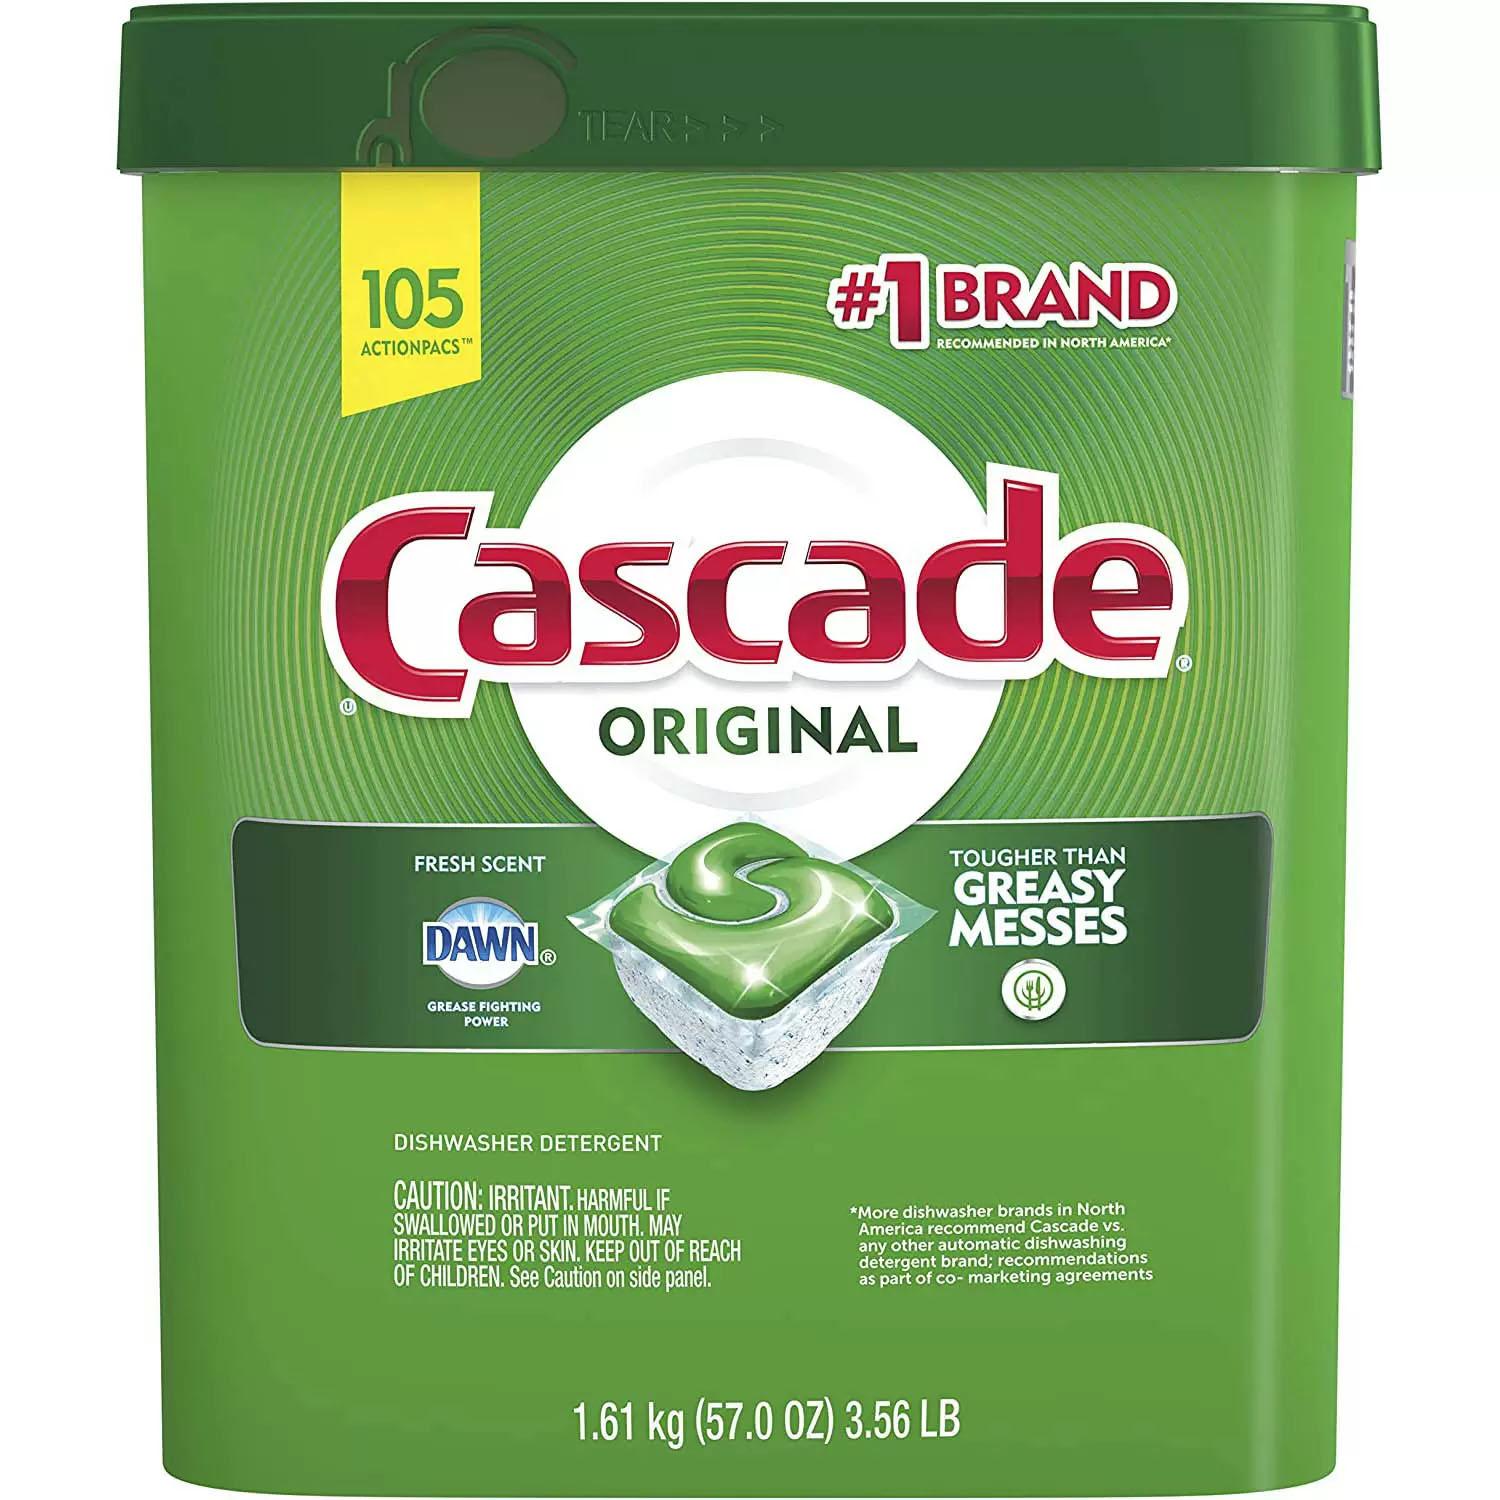 315 Cascade Original ActionPacs Dishwasher Detergent for $37.95 Shipped